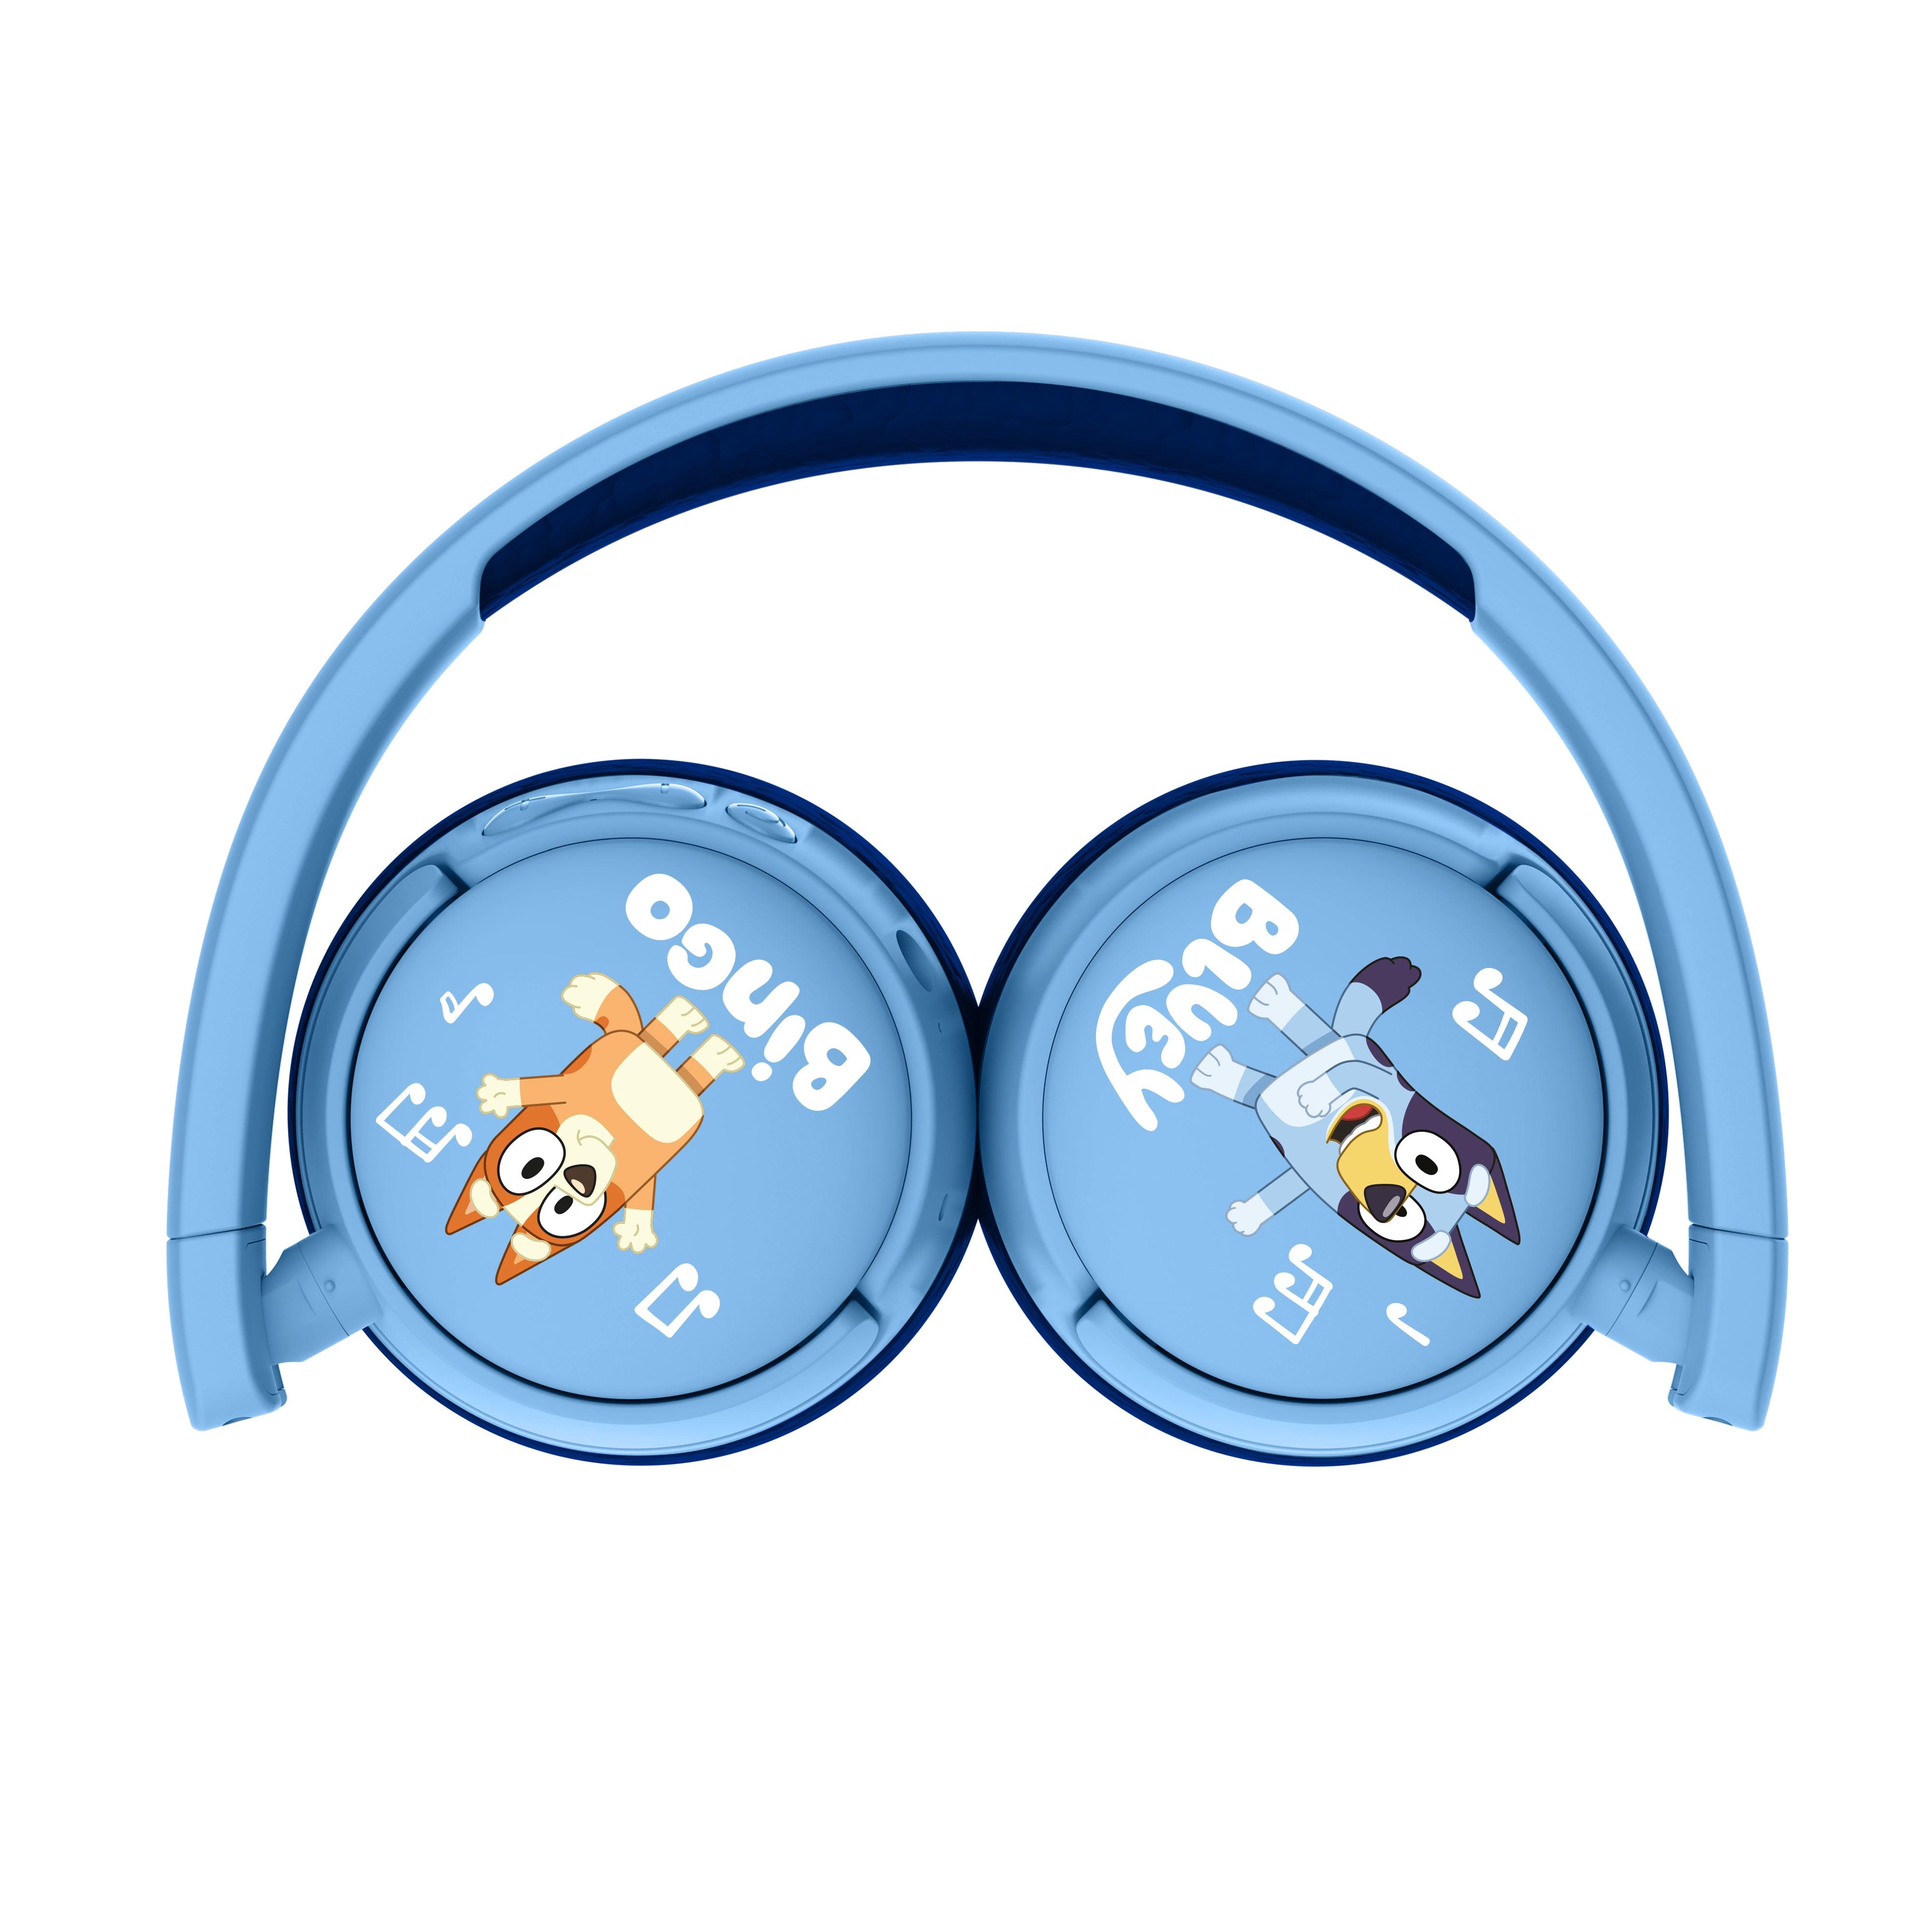 Bluey Kids Wireless Headphones BL1078 - Blue - childrensheadphones.co.uk